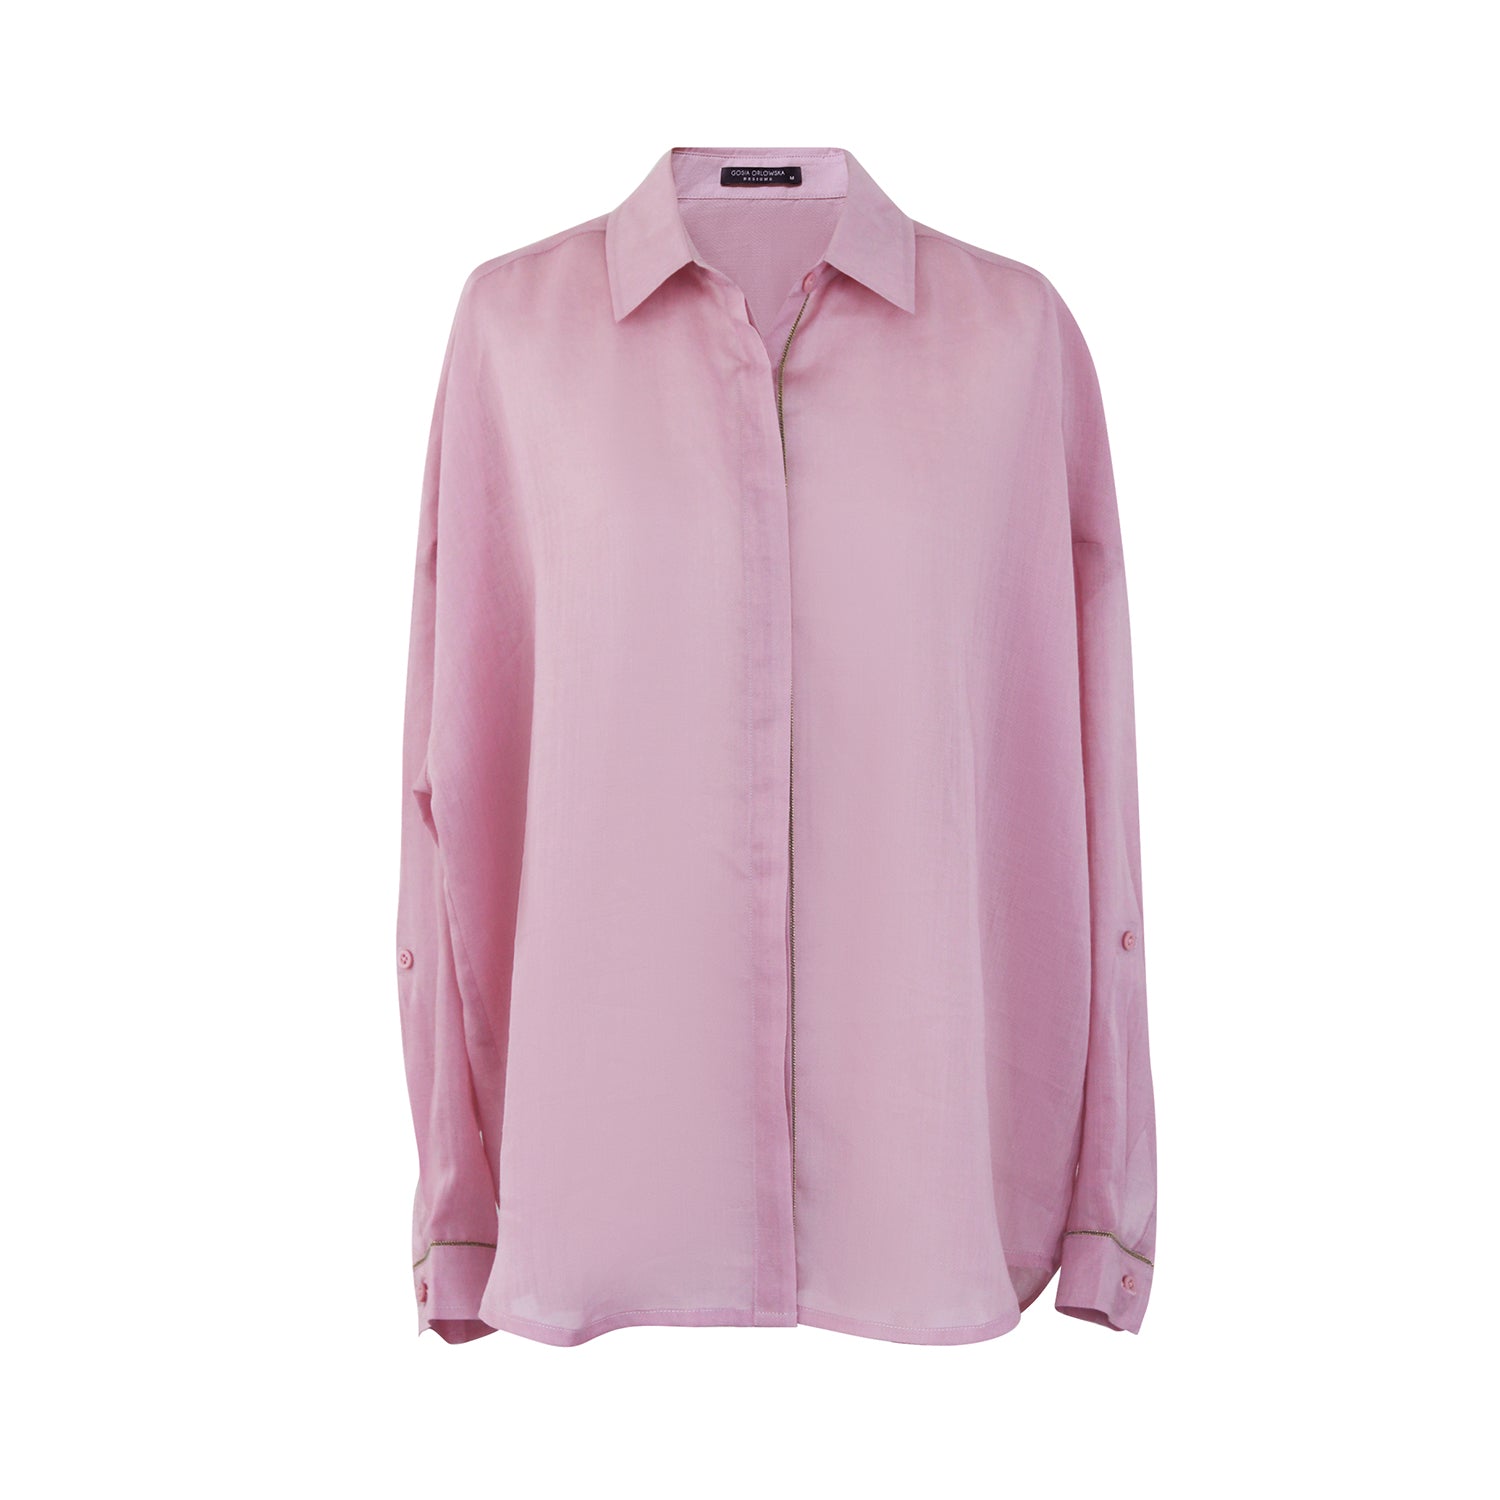 Get the JODIE Pink Linen Shirt Online